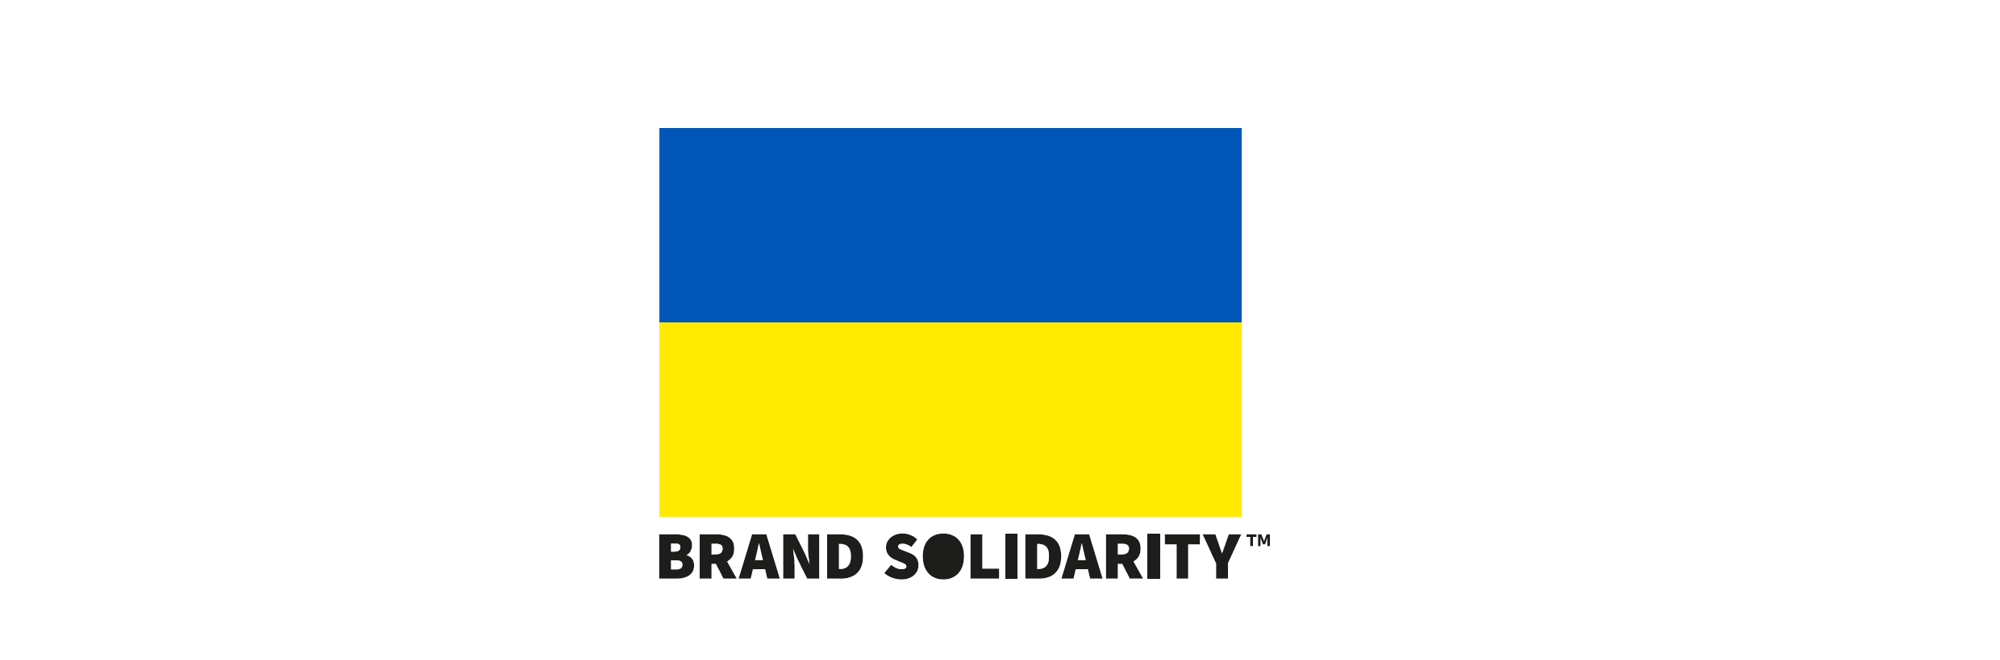 Brands unite to display solidarity with Ukraine